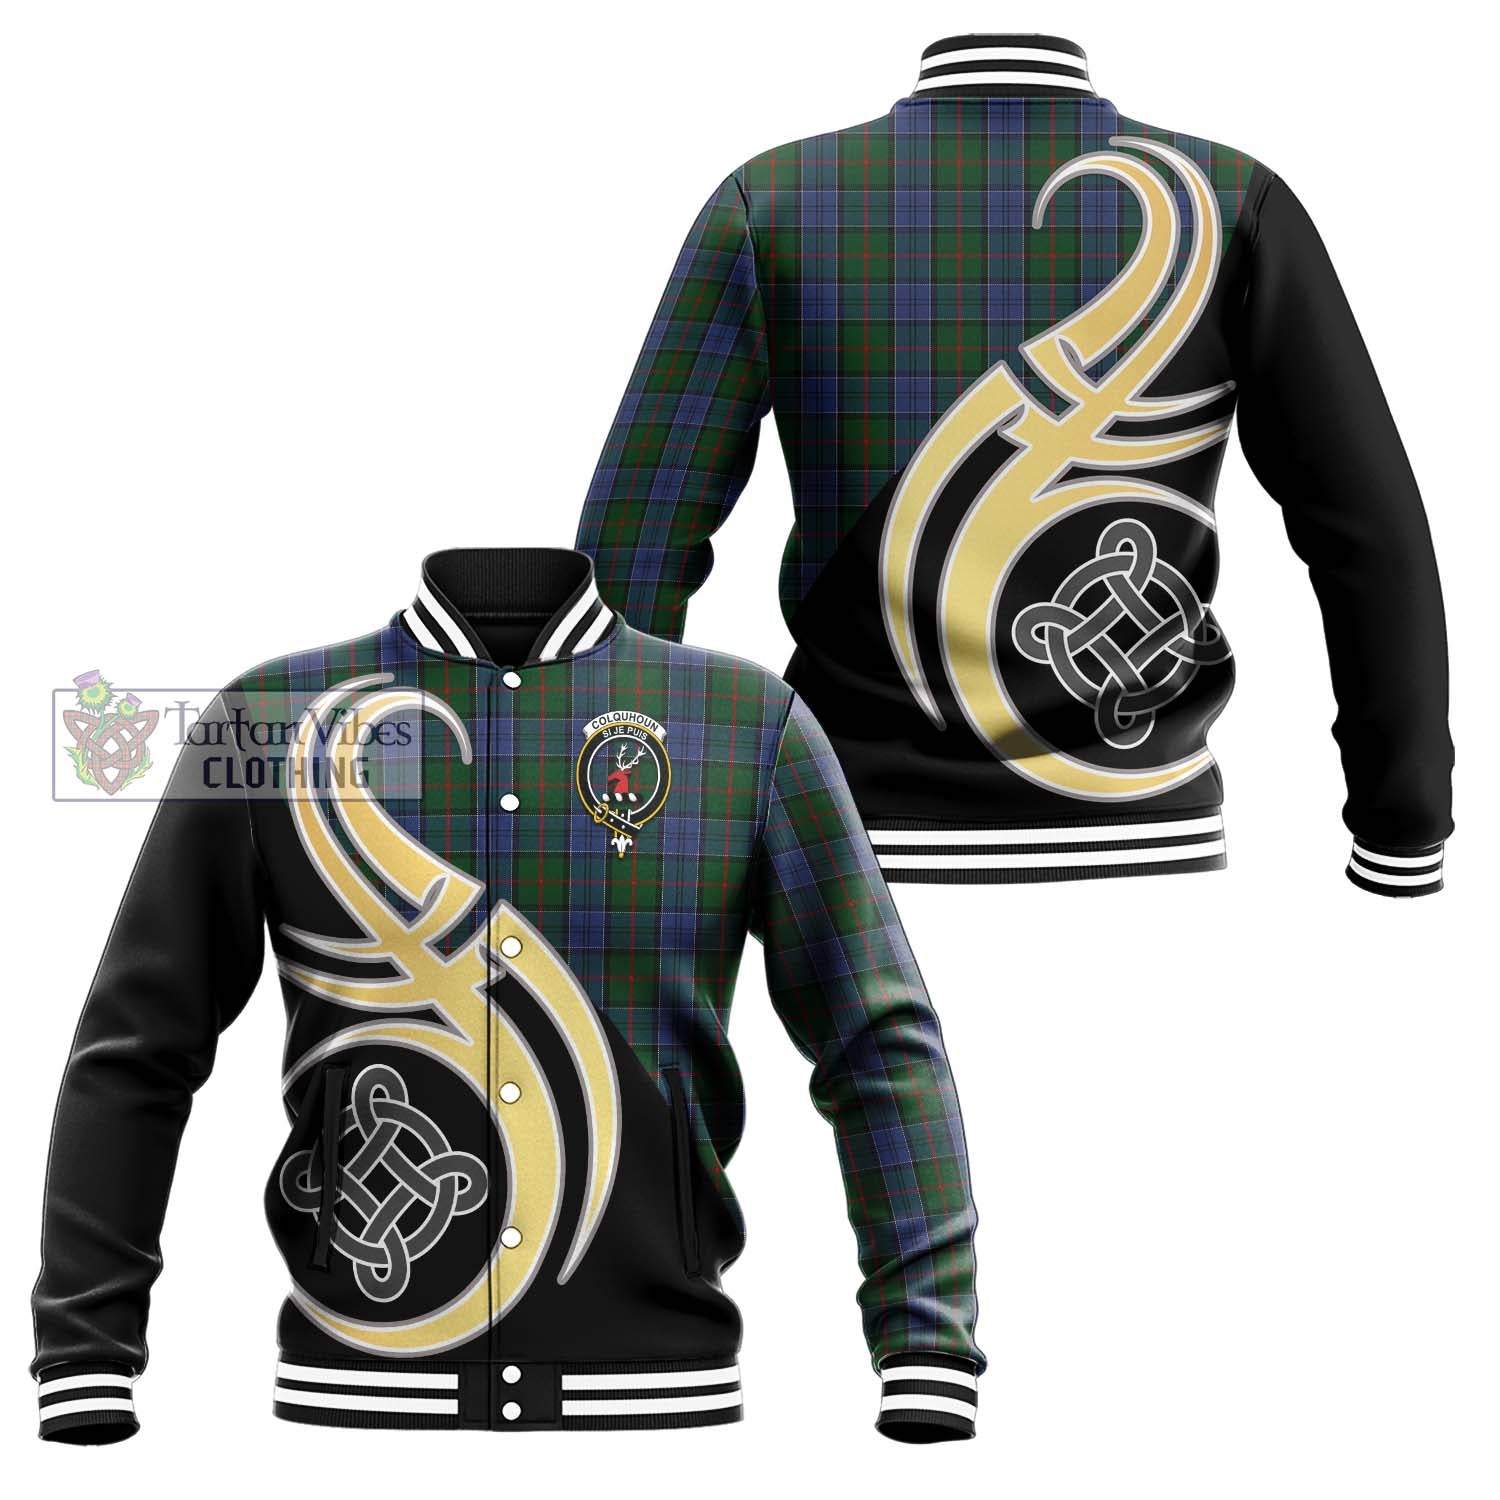 Tartan Vibes Clothing Colquhoun Tartan Baseball Jacket with Family Crest and Celtic Symbol Style